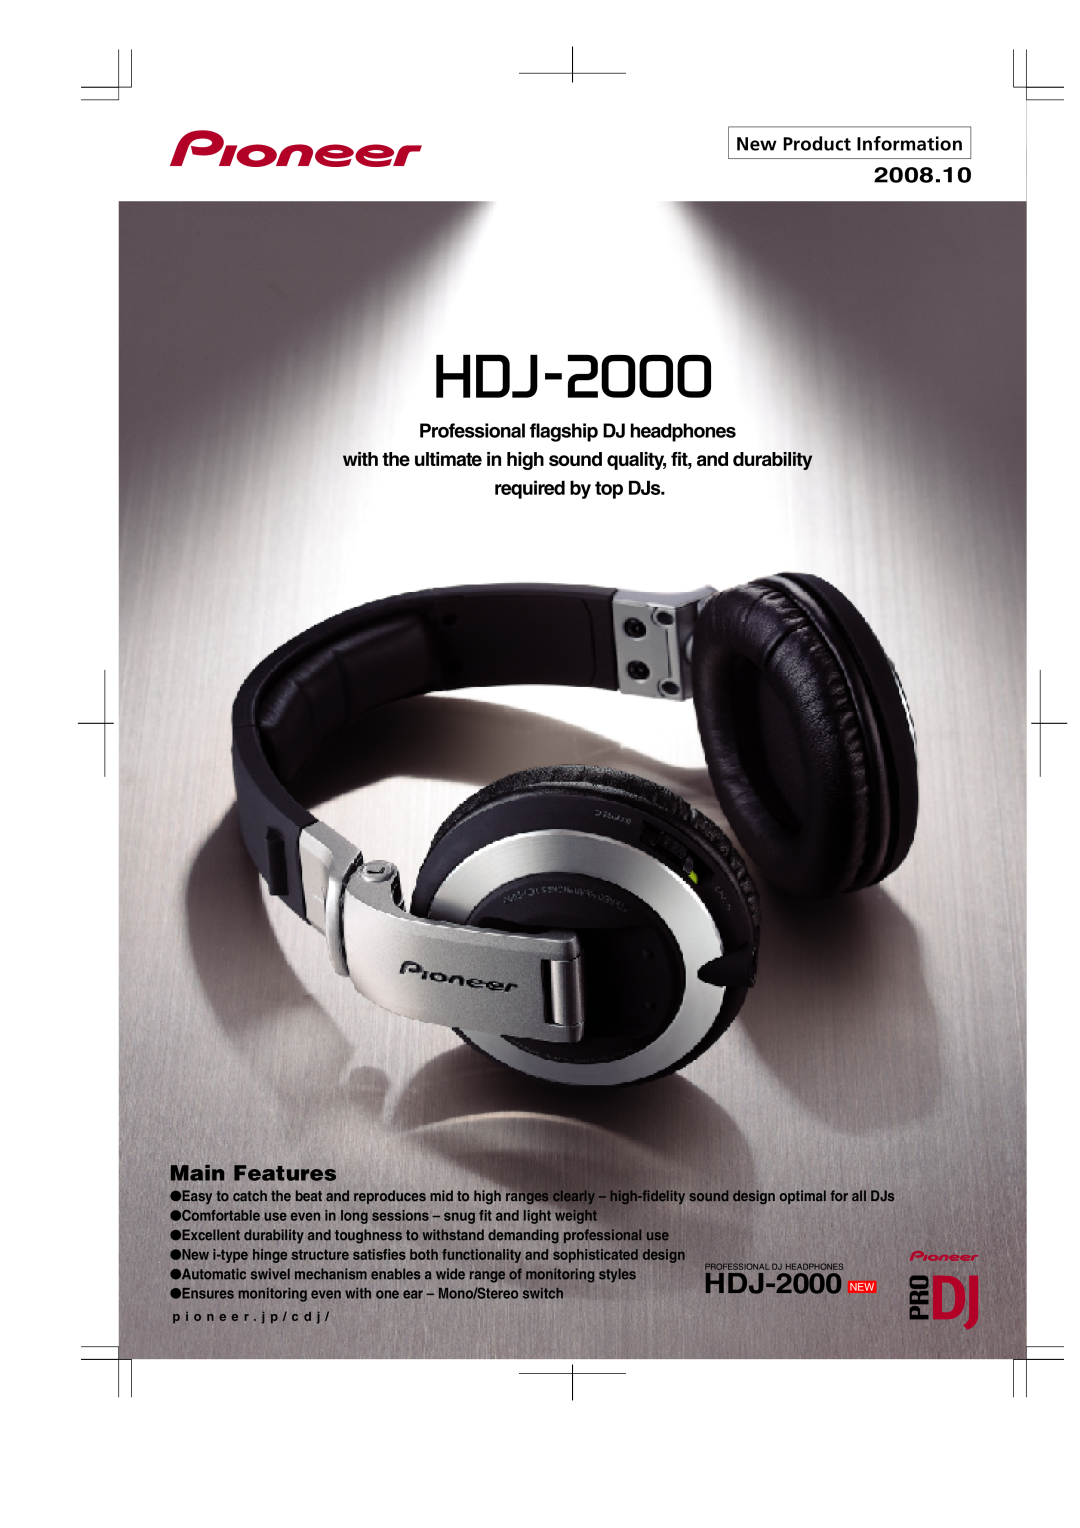 Pioneer HDJ-2000 manual 2008.10, Main Features, New Product Information, Professional flagship DJ headphones 